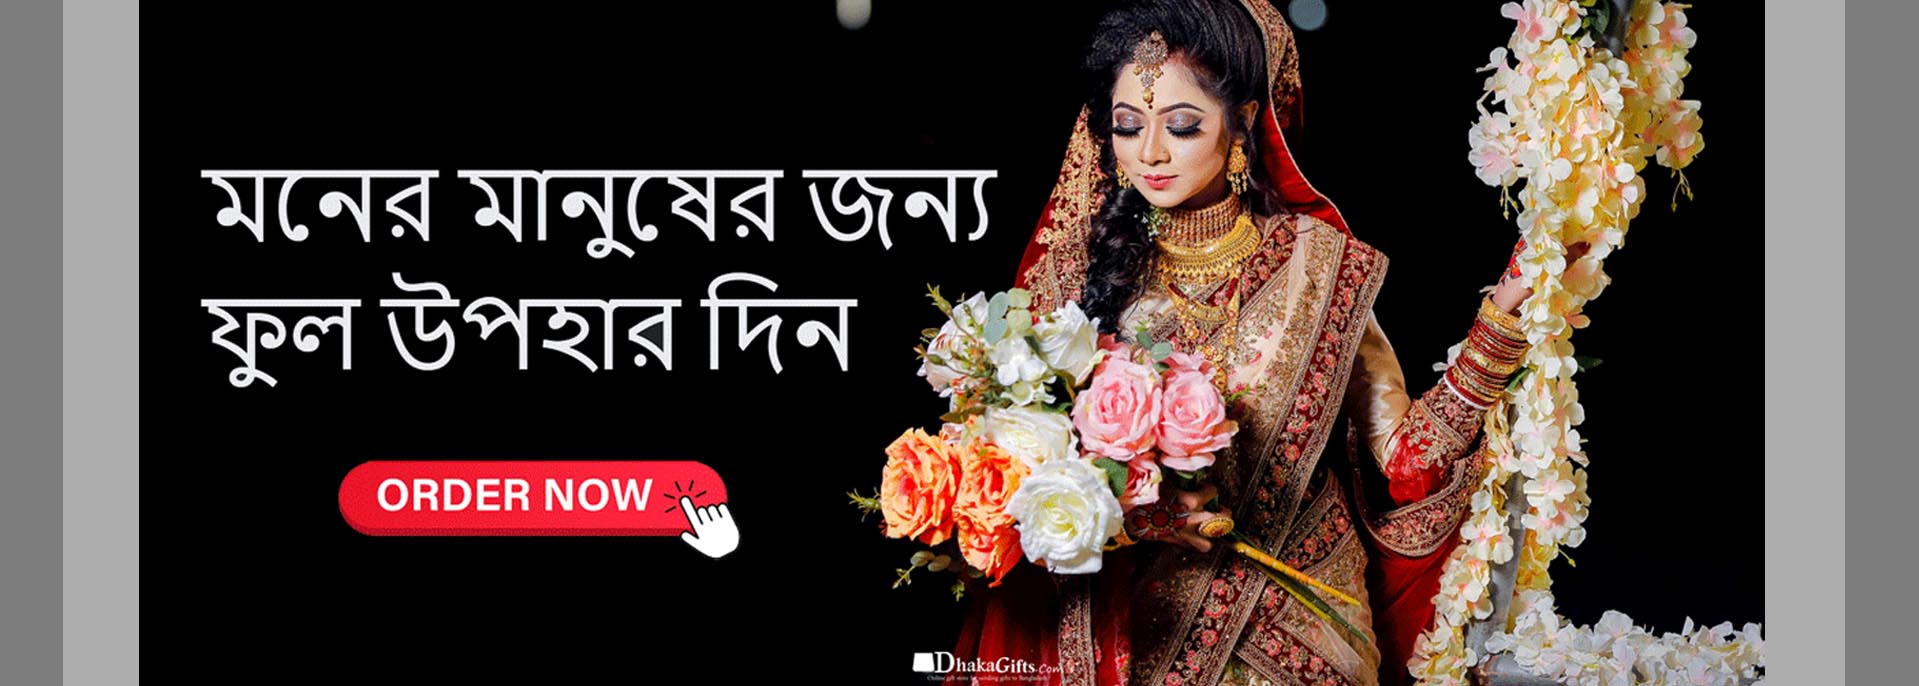 send eid gifts to dhaka in bangladesh